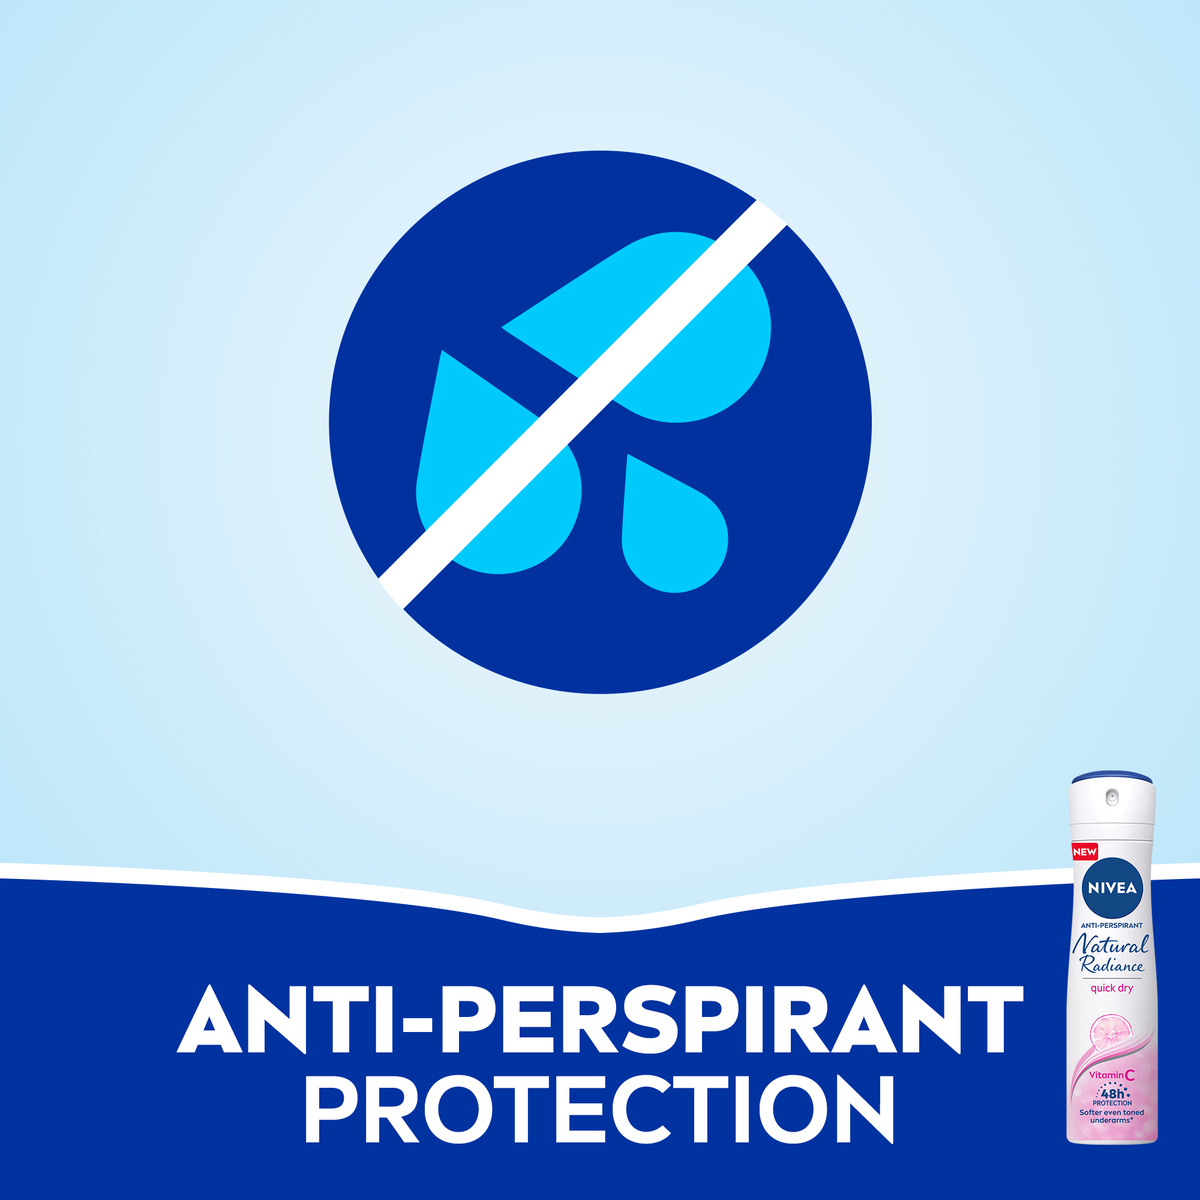 Nivea Antiperspirant Spray For Women Natural Radiance Value Pack 2 x 150 ml